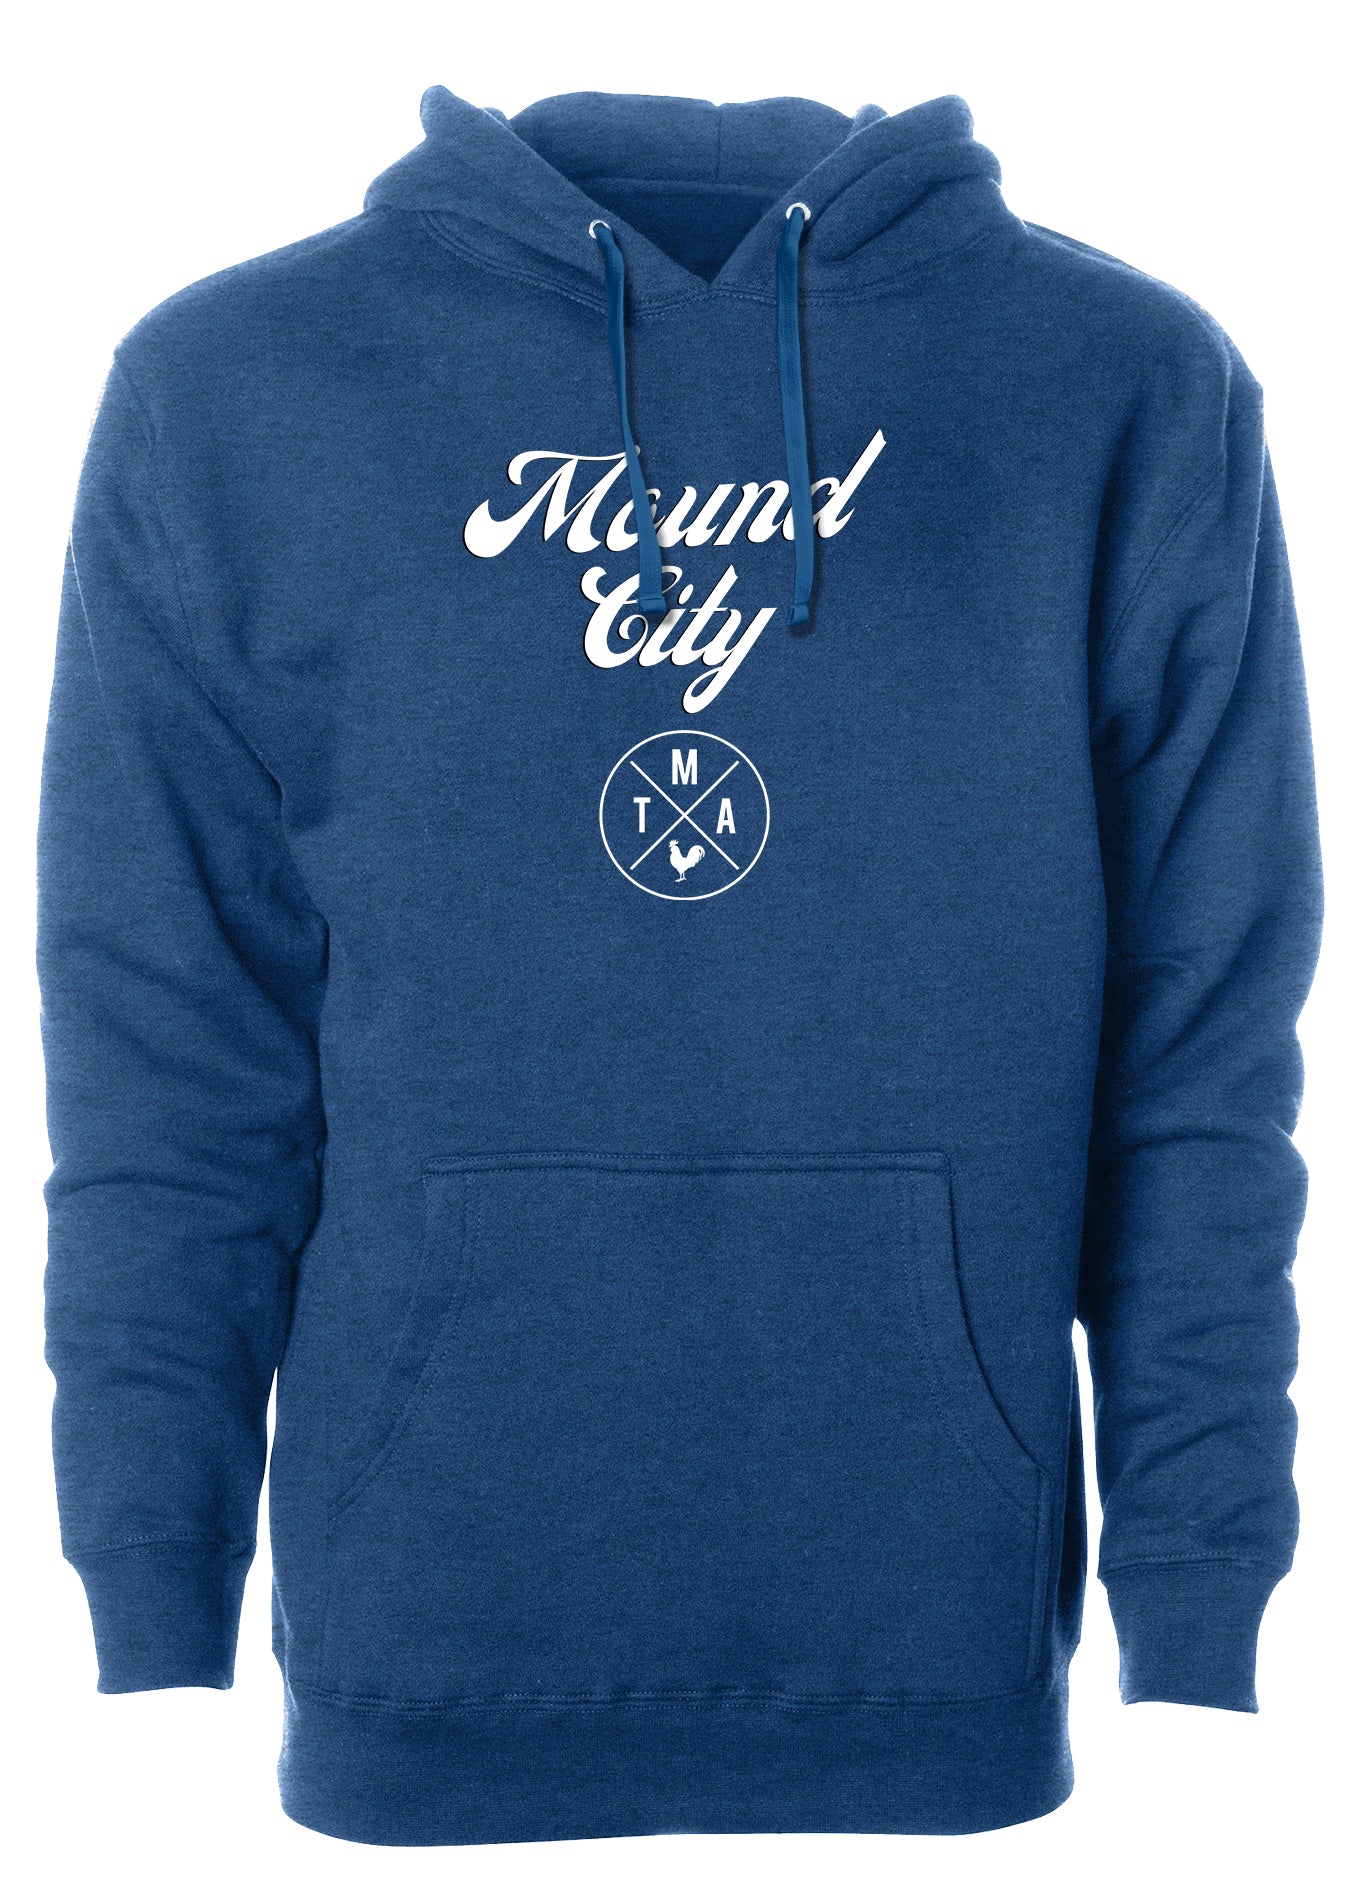 st louis mound city stl hooded sweatshirt apparel arch city tma charcoal blue blues